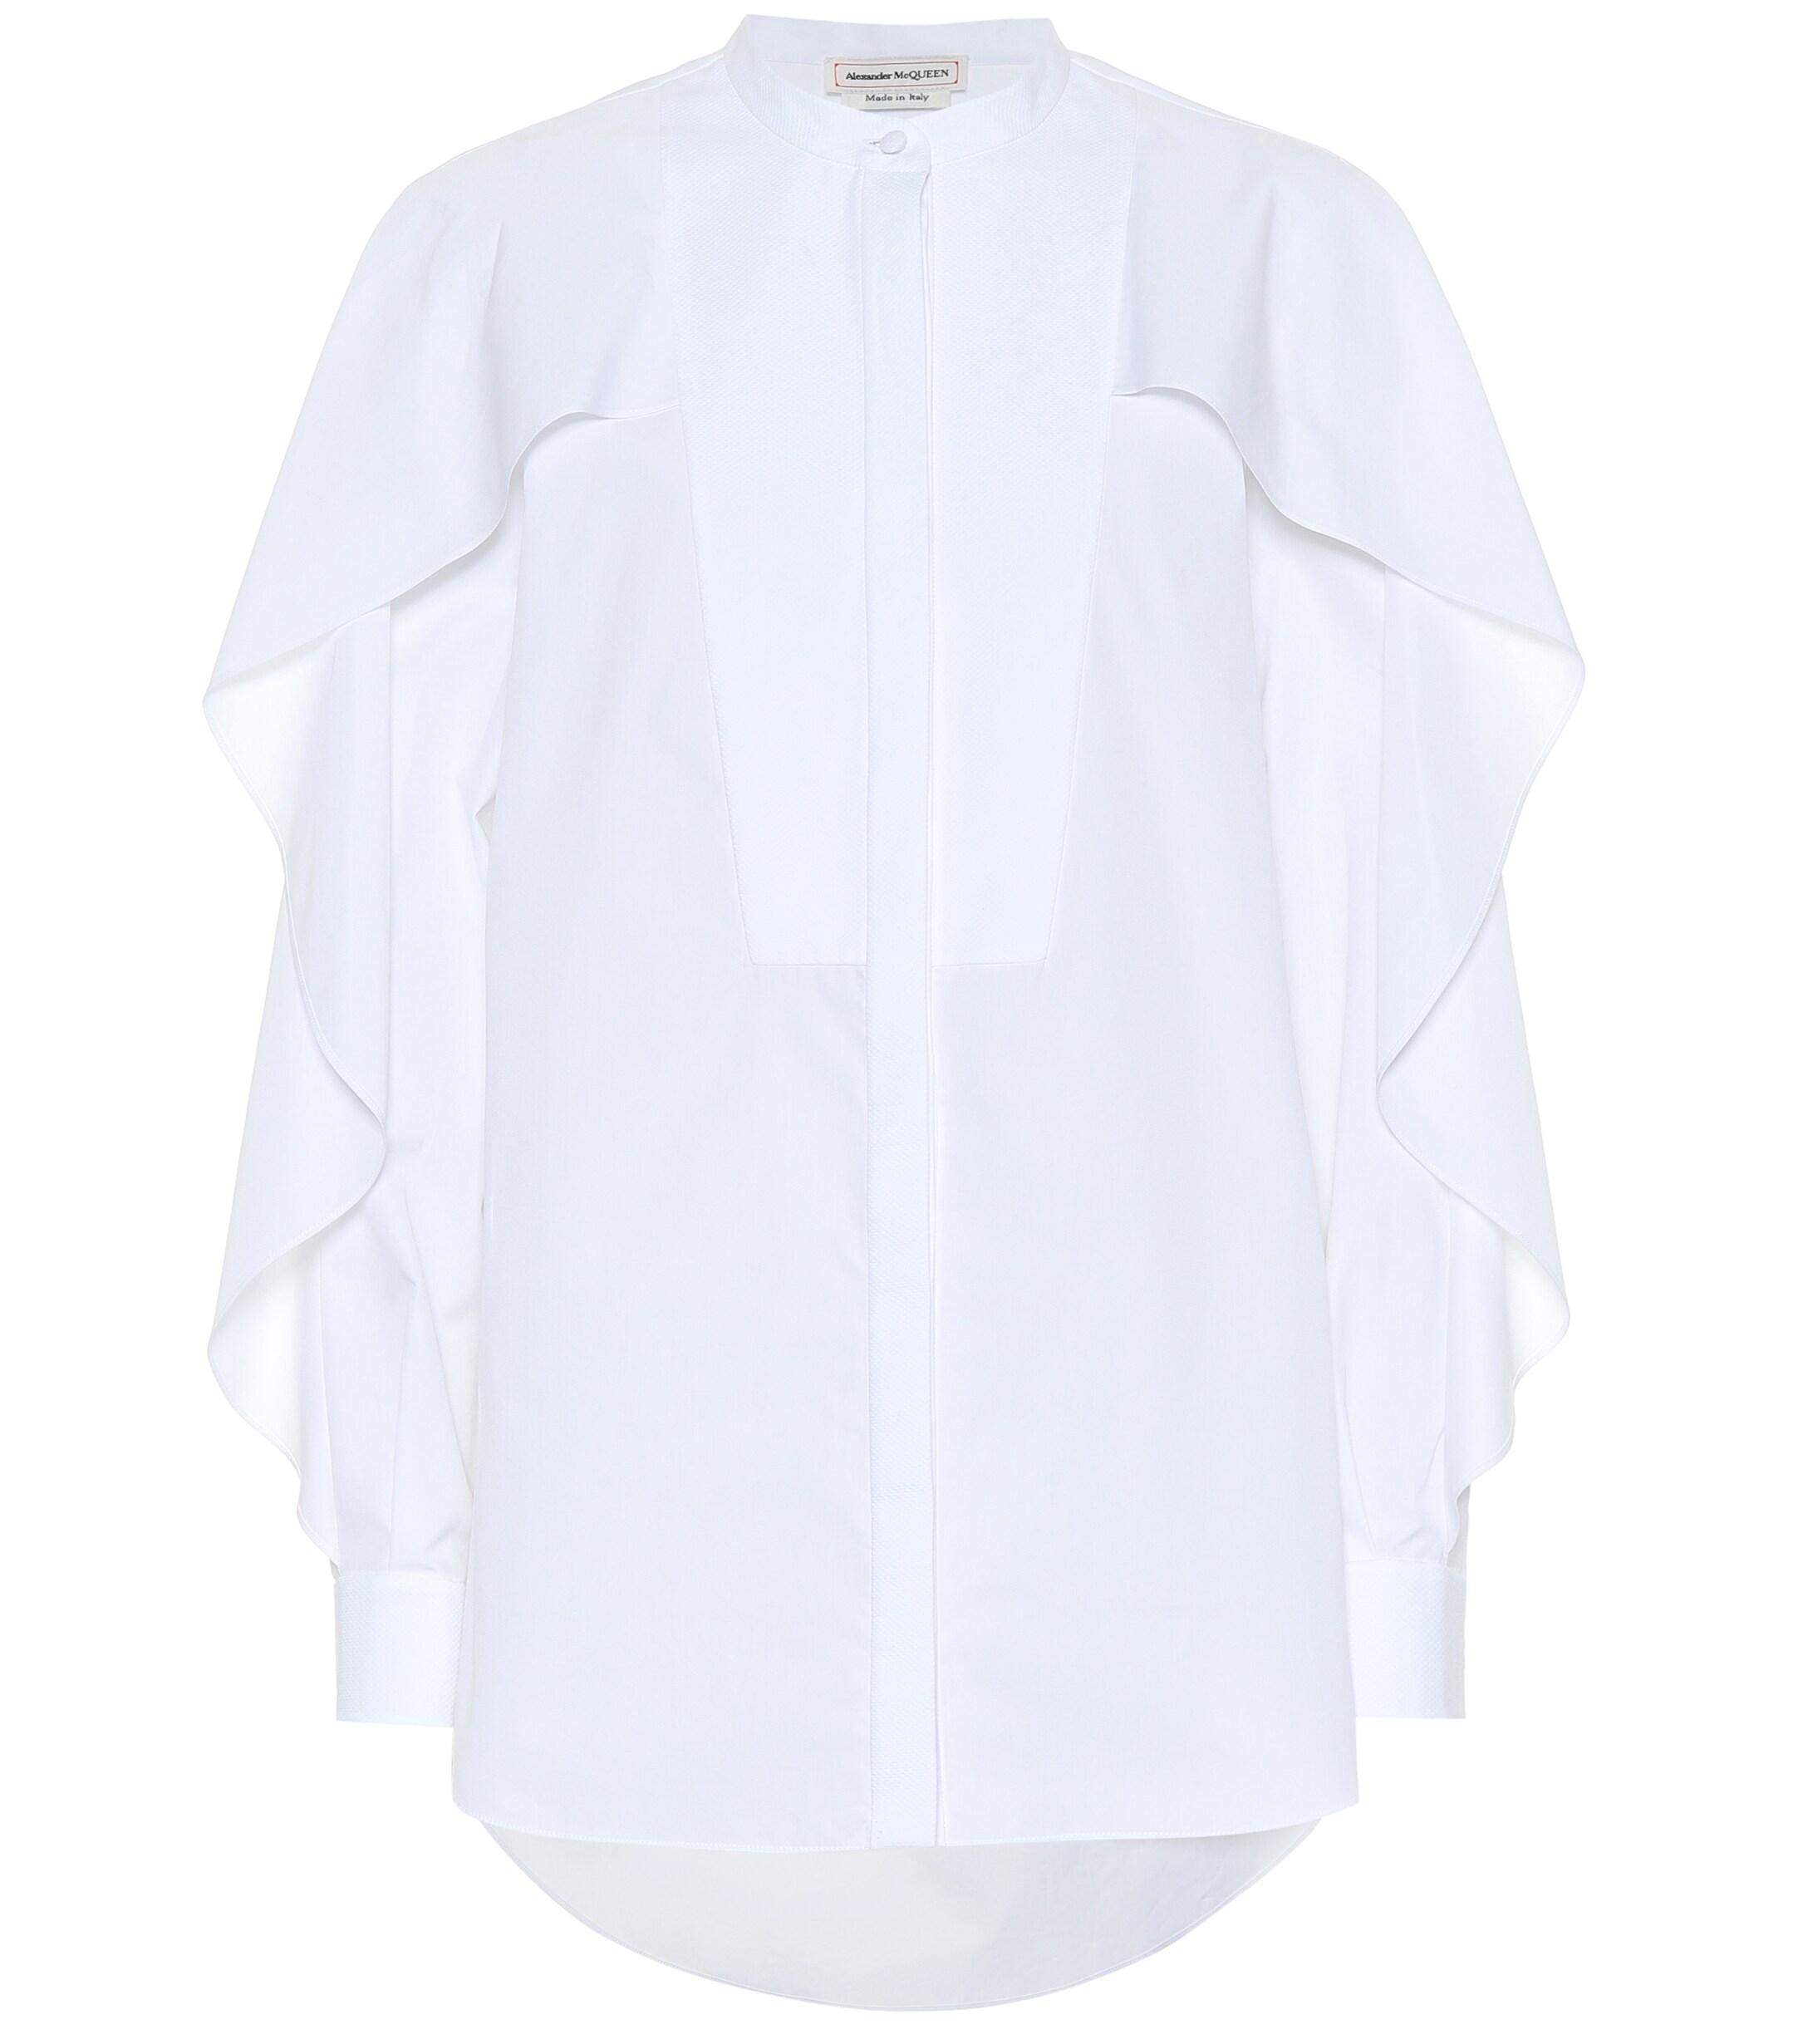 Alexander McQueen Ruffled Cotton Blouse in White - Lyst